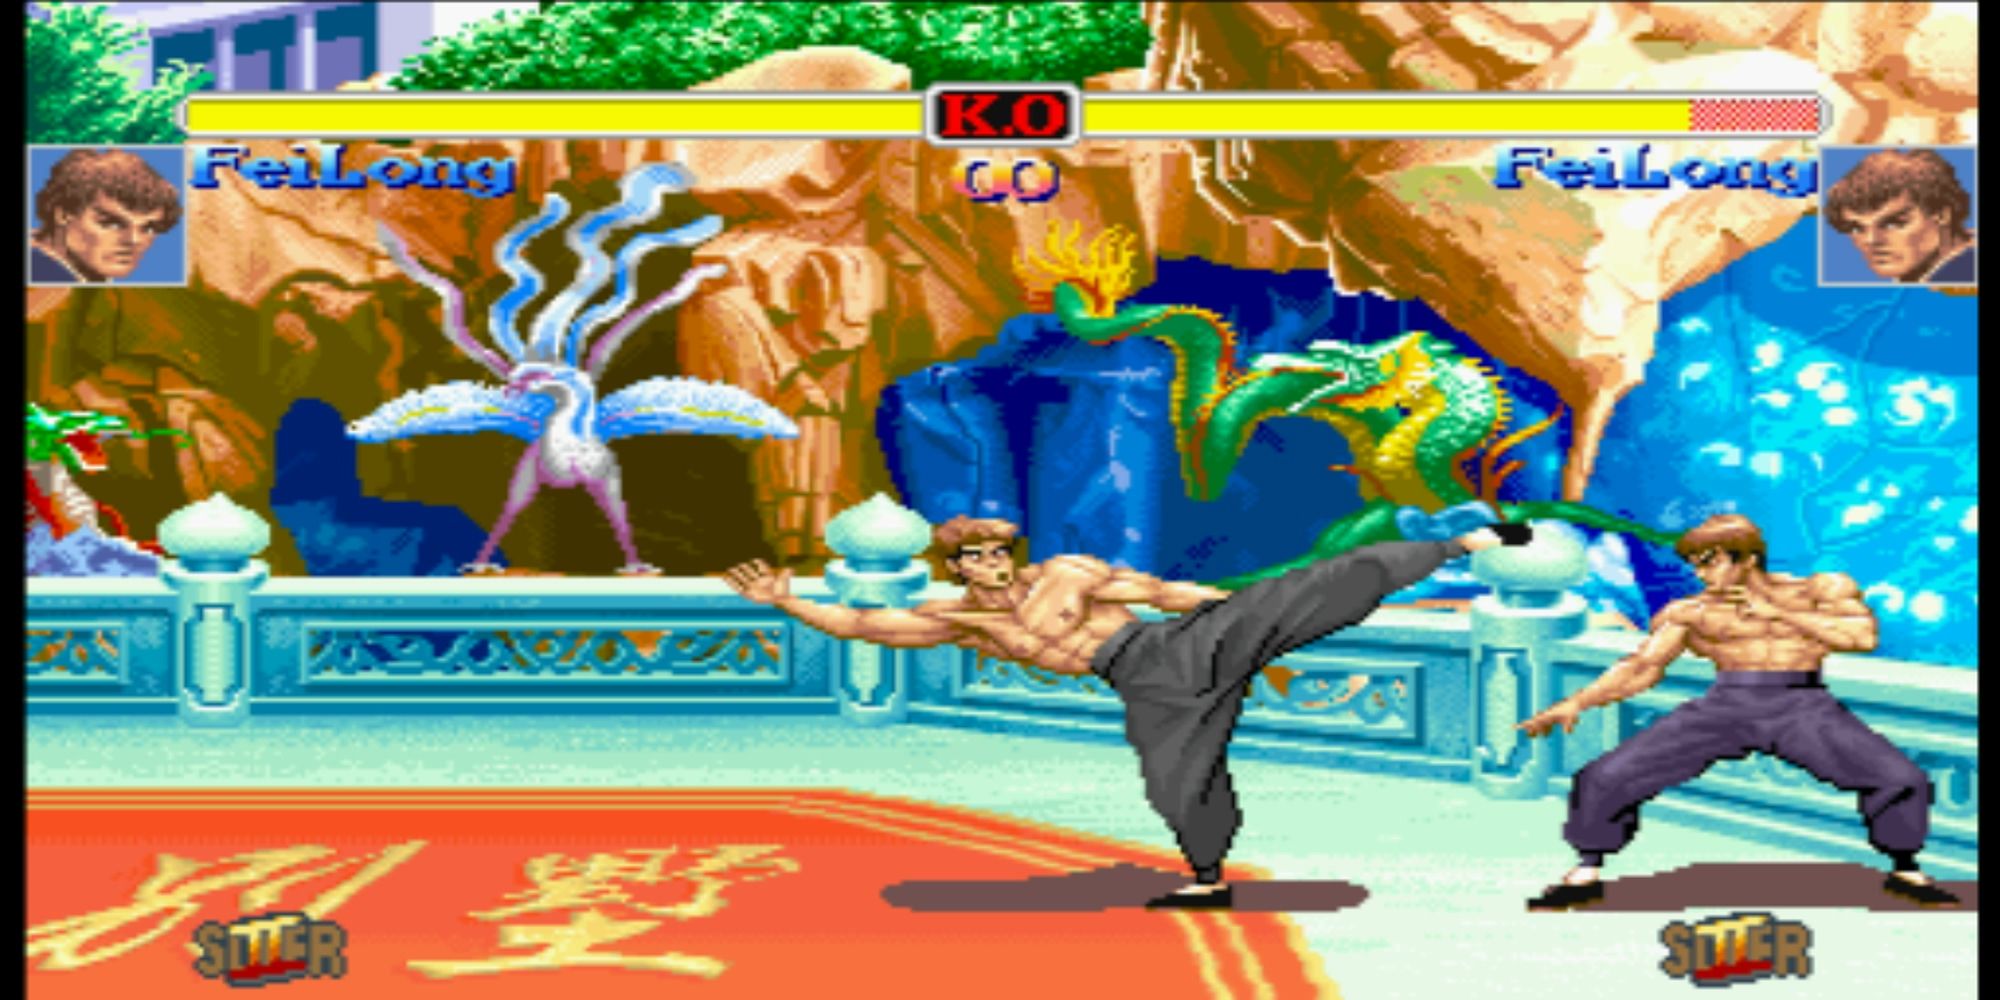 Super SF2 Fei Long kicks Fei Long in a battle at a Chinese Garden in Hyper Street Fighter 2.